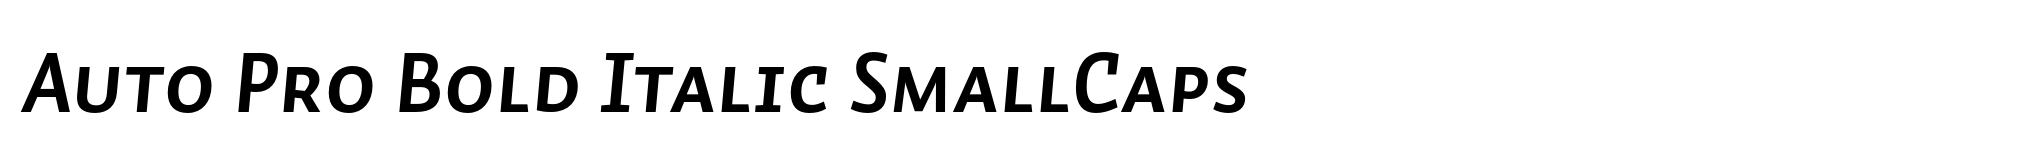 Auto Pro Bold Italic SmallCaps image